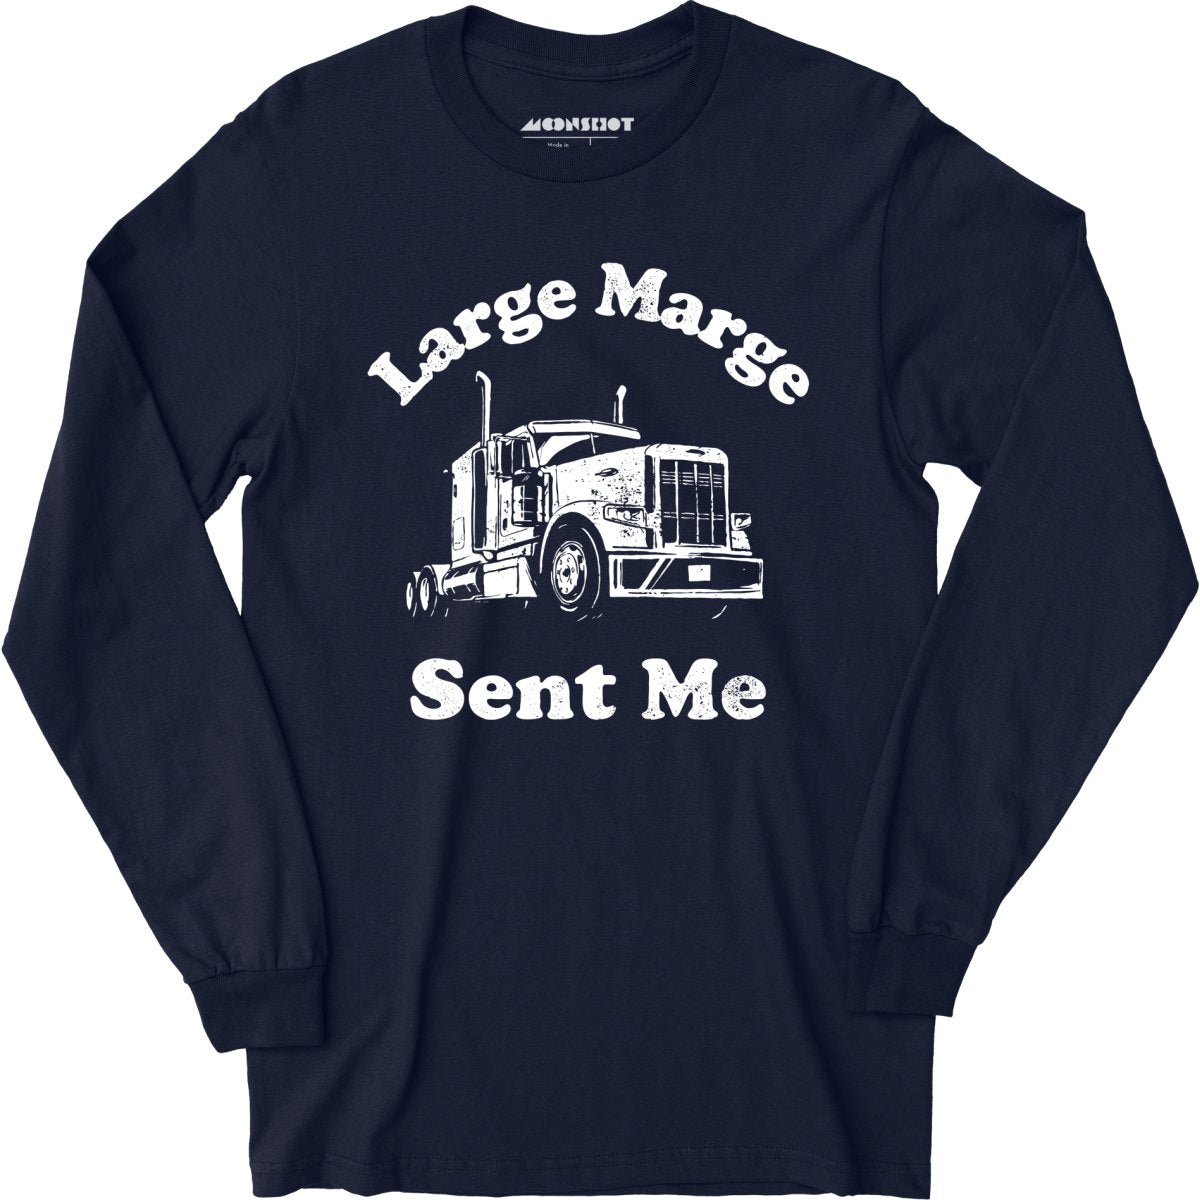 Large Marge Sent Me - Long Sleeve T-Shirt